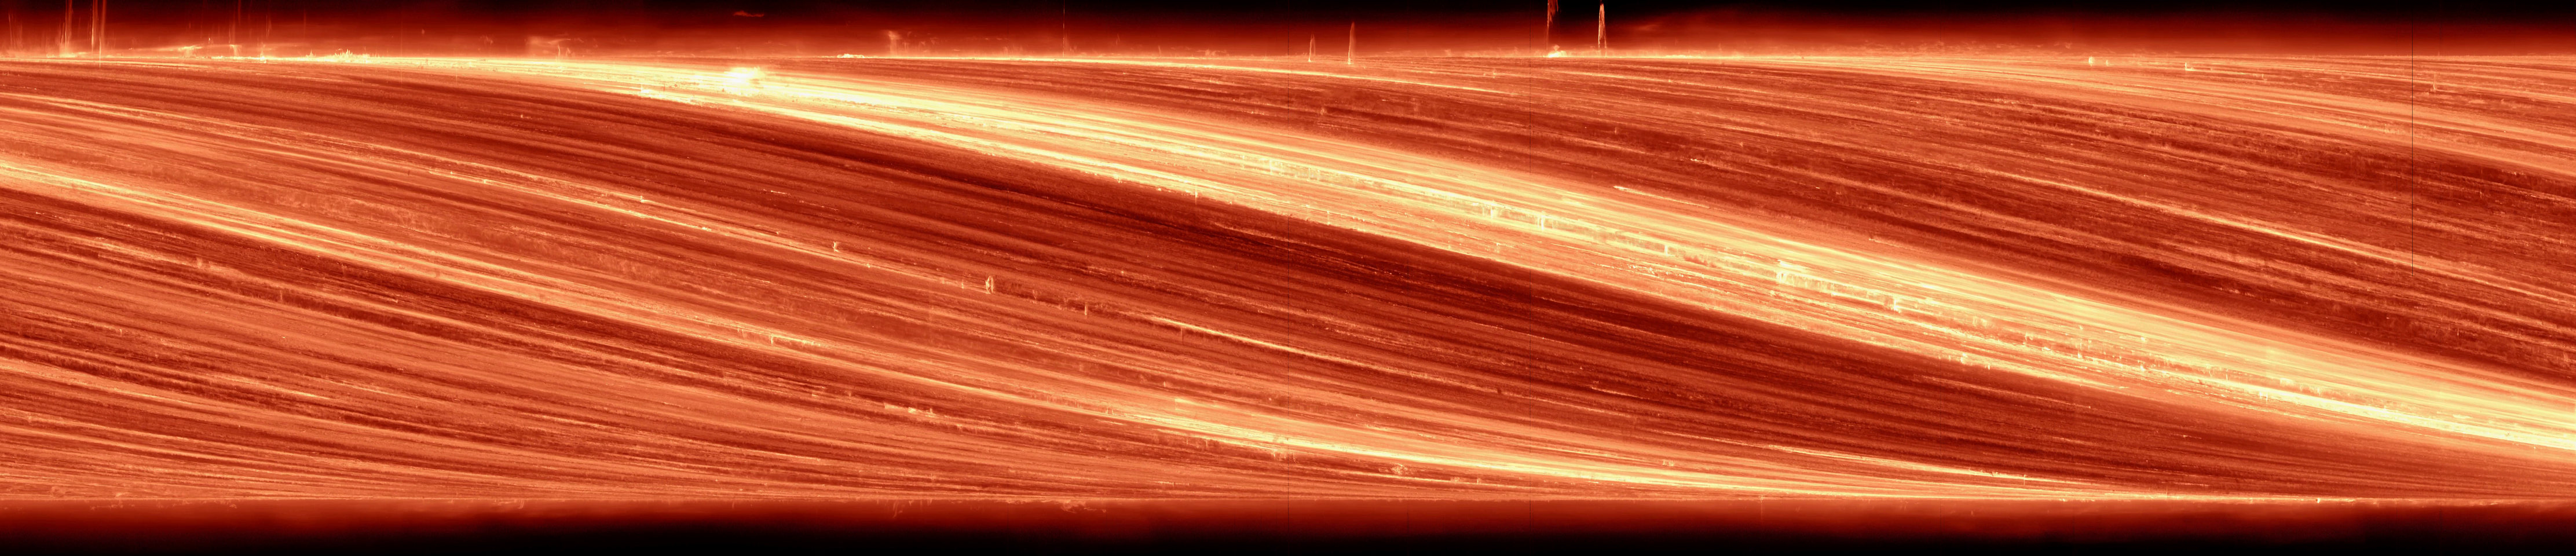 Solar slitscan image